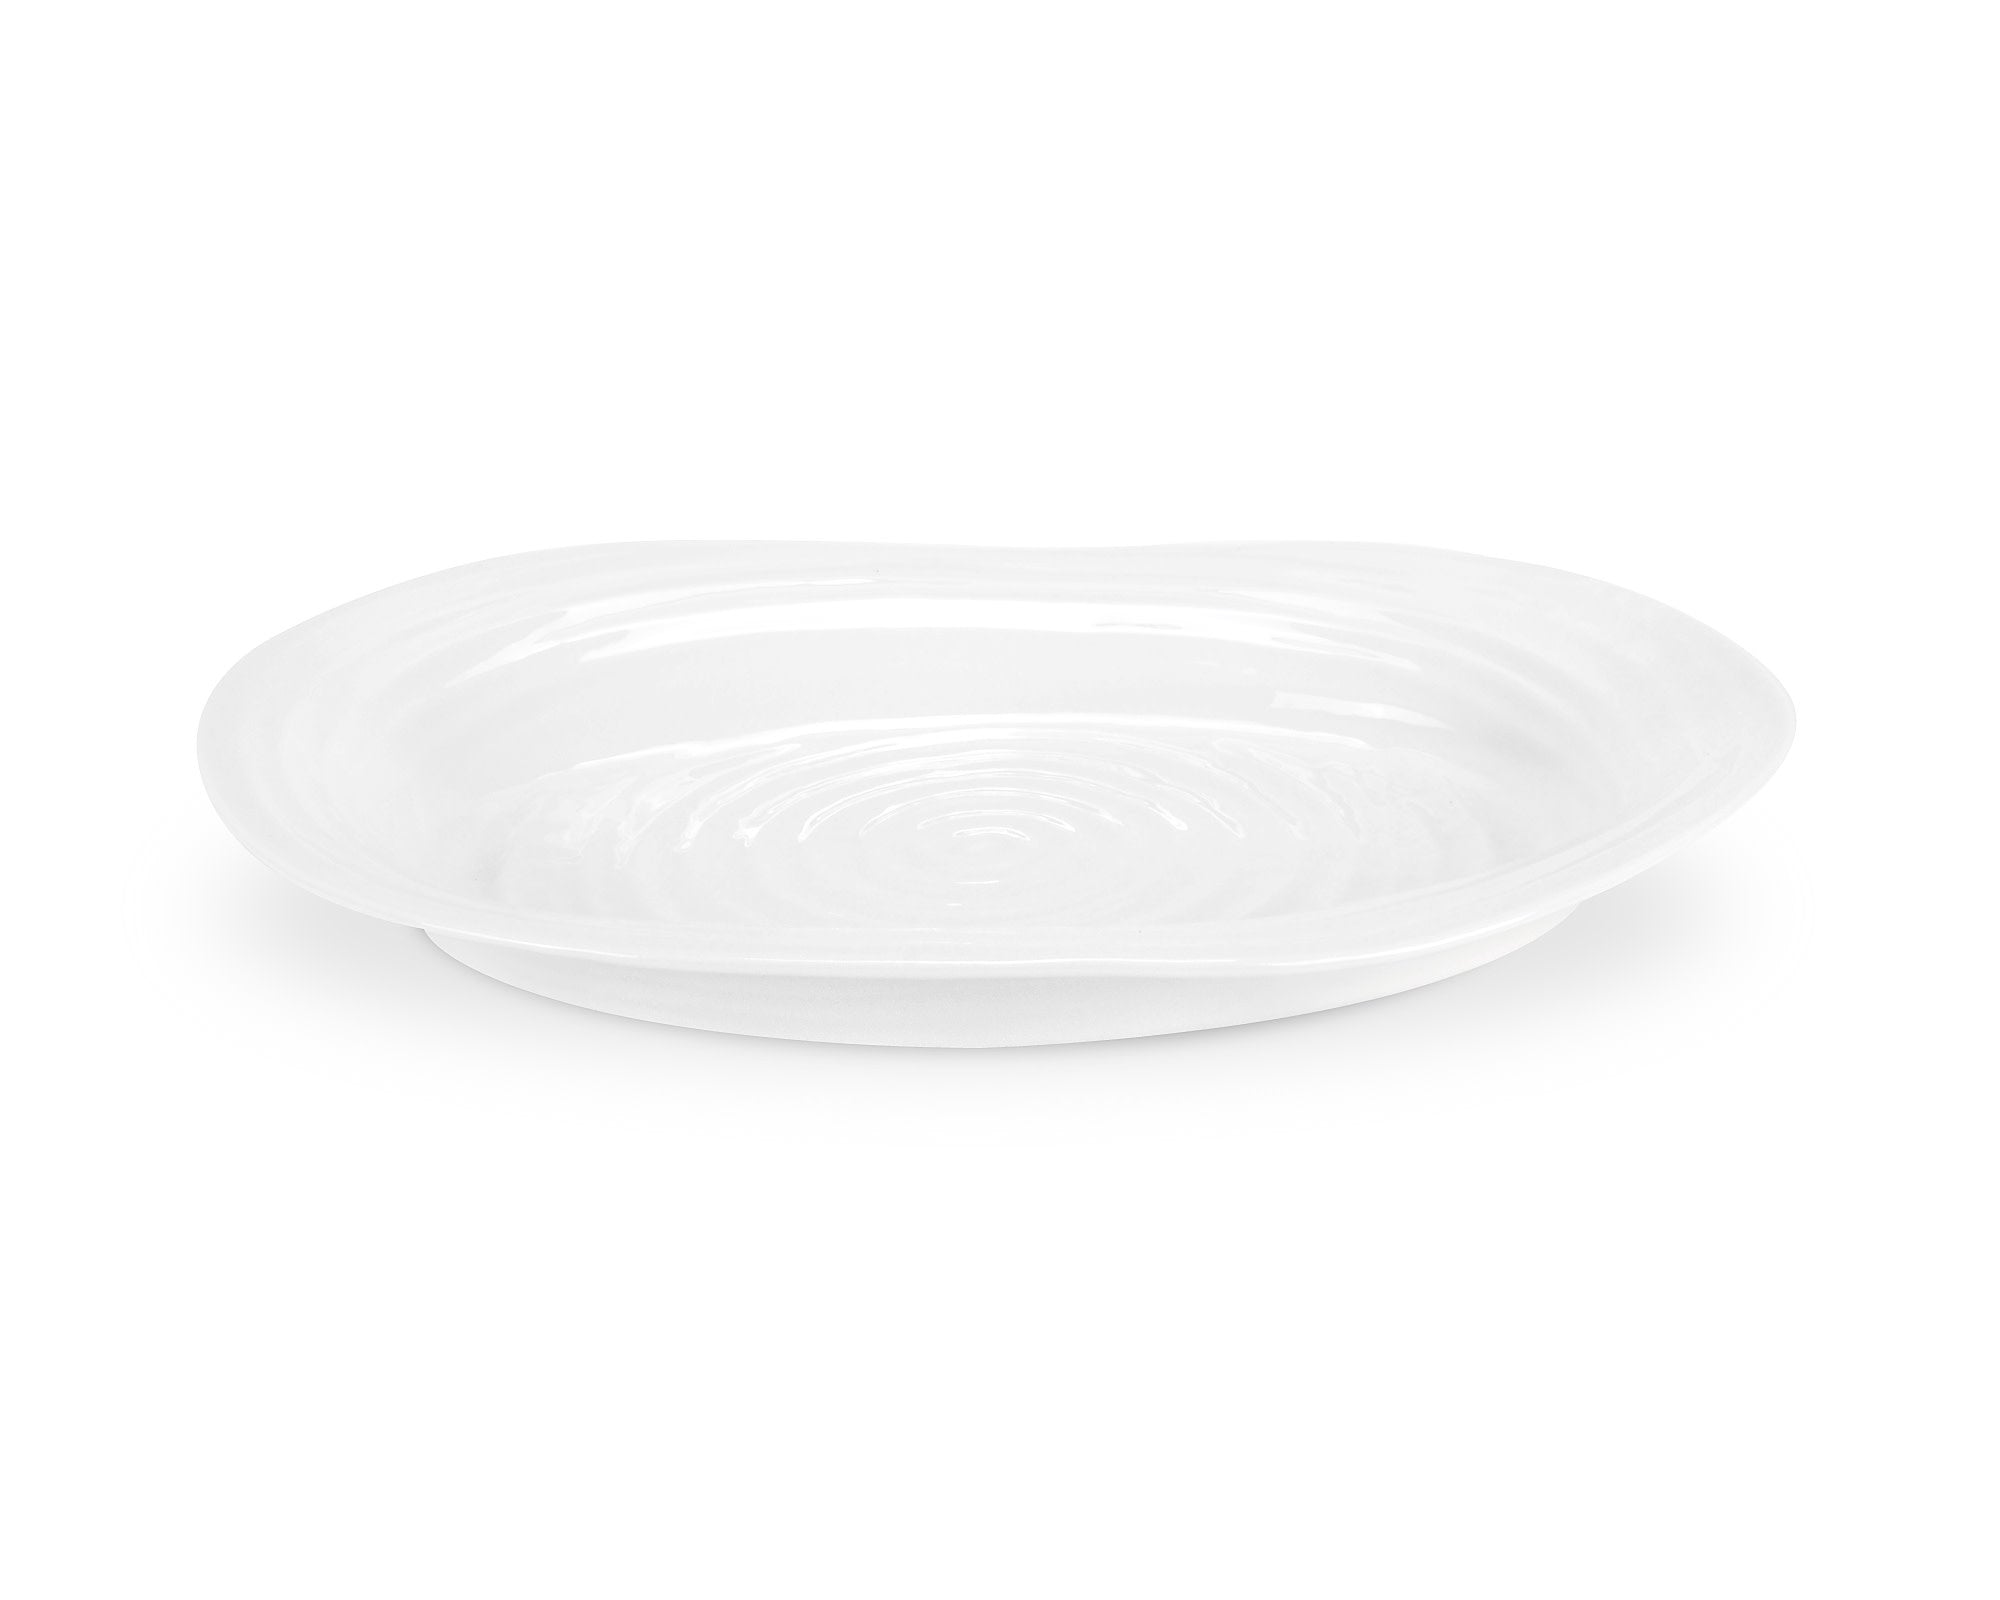 Maison Lipari Sophie Conran White Medium Oval Platter 14.5''  PORTMEIRION.